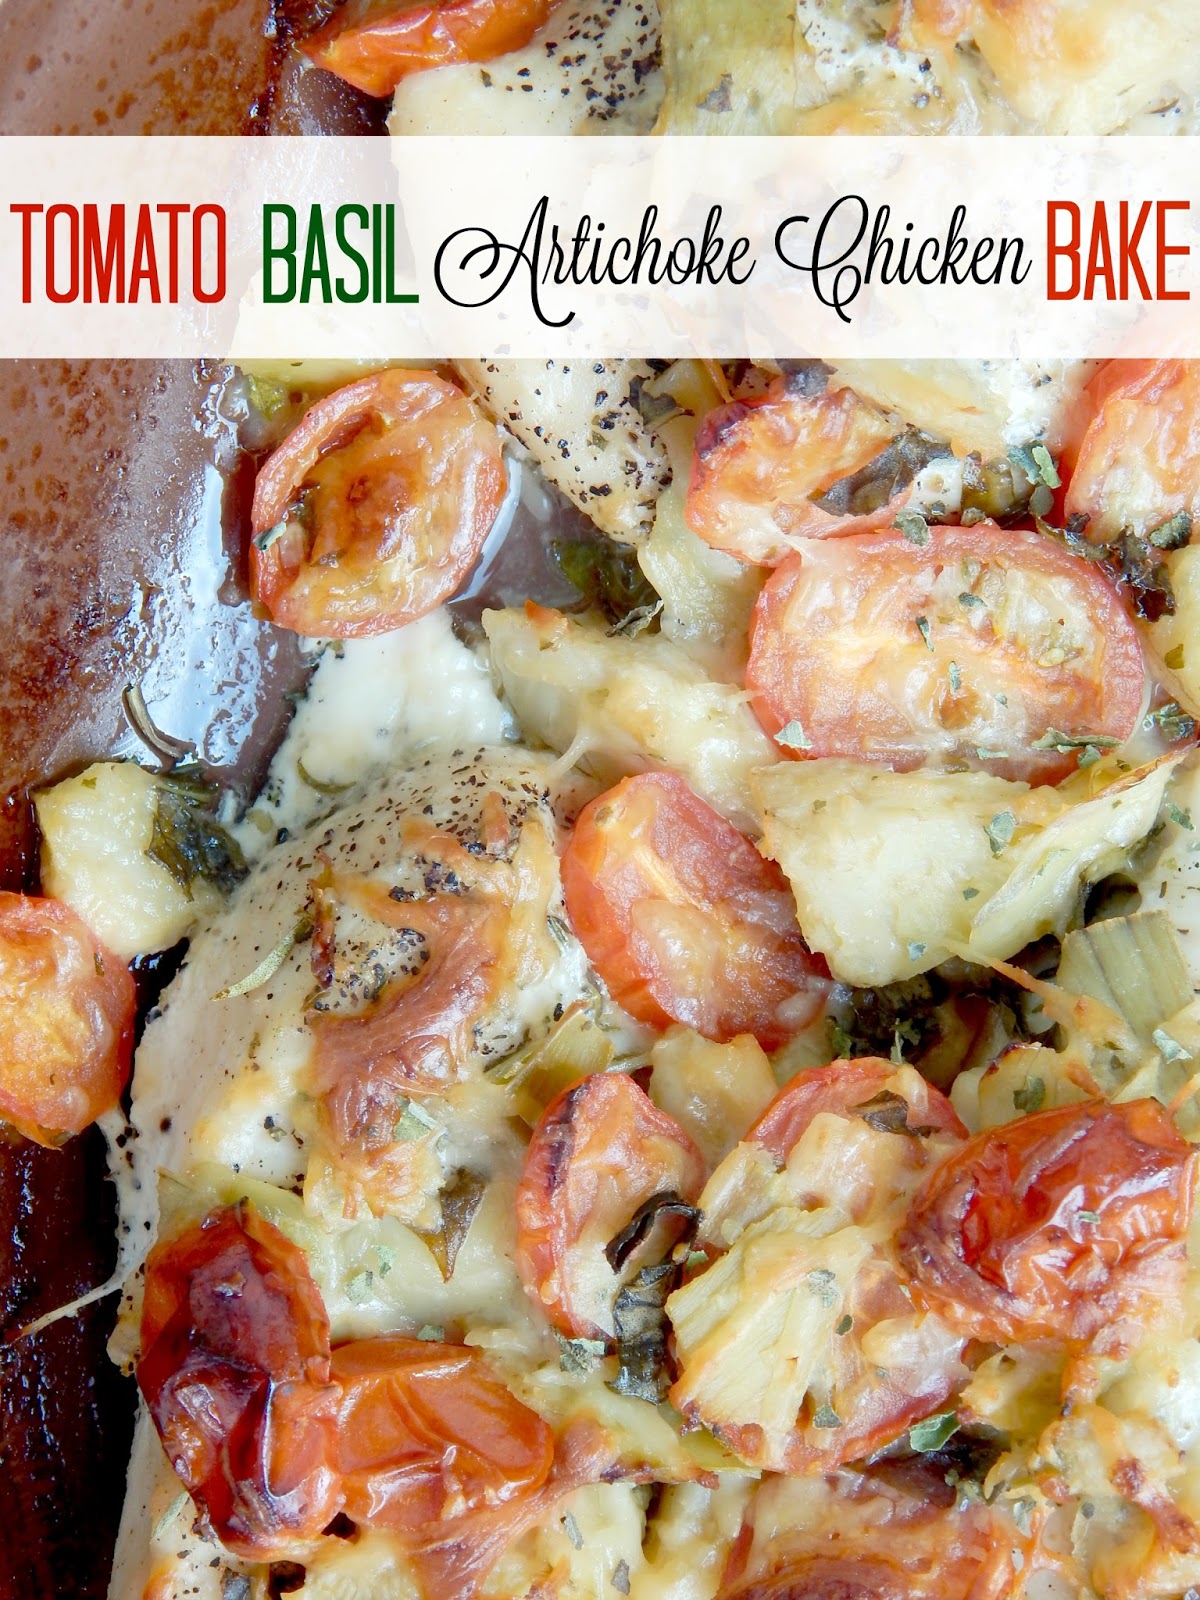 Tomato Basil Artichoke Chicken Bake | Ally's Sweet & Savory Eats